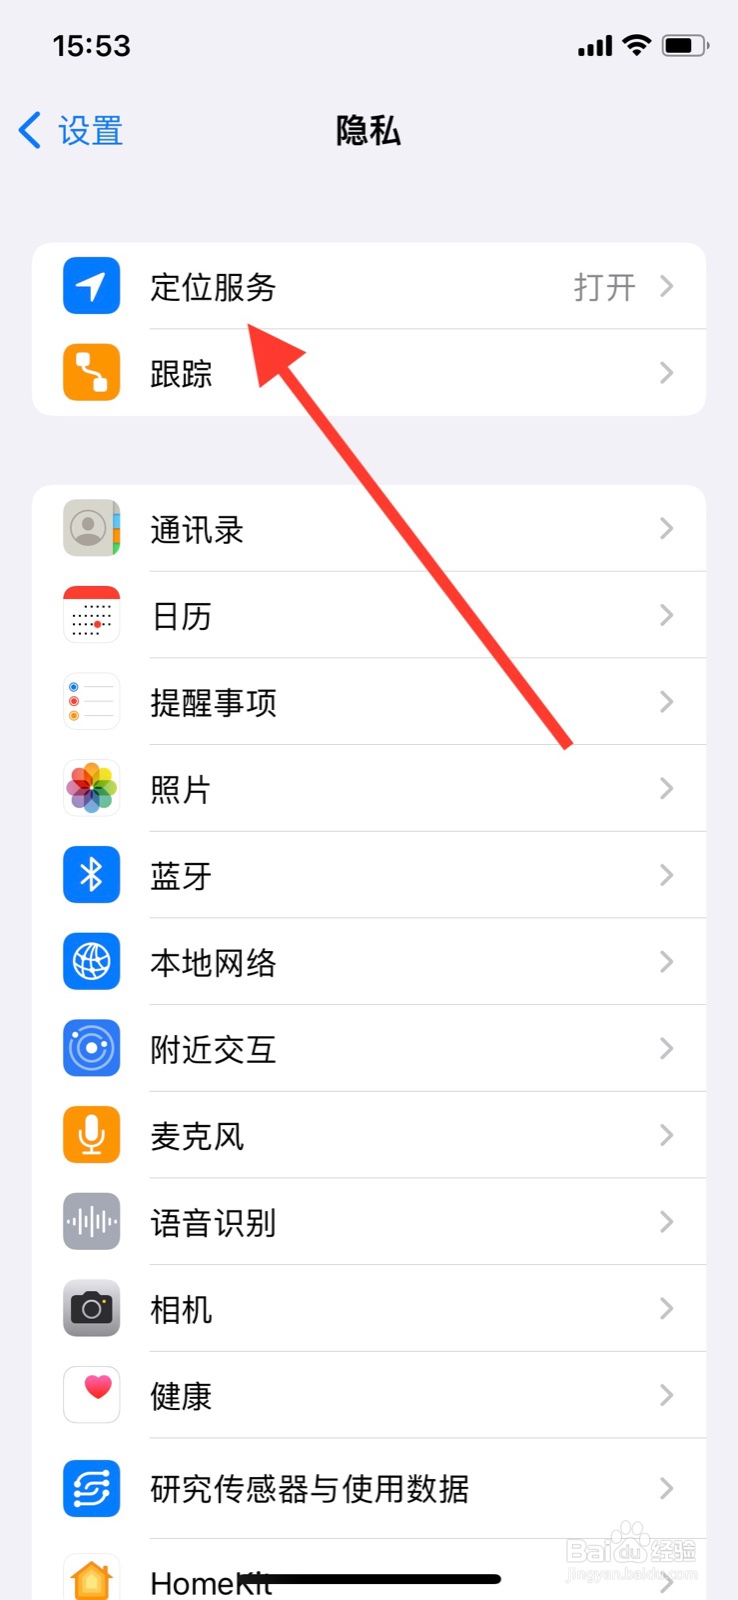 <b>iPhone准许“菜鸟”app访问系统定位精确位置</b>